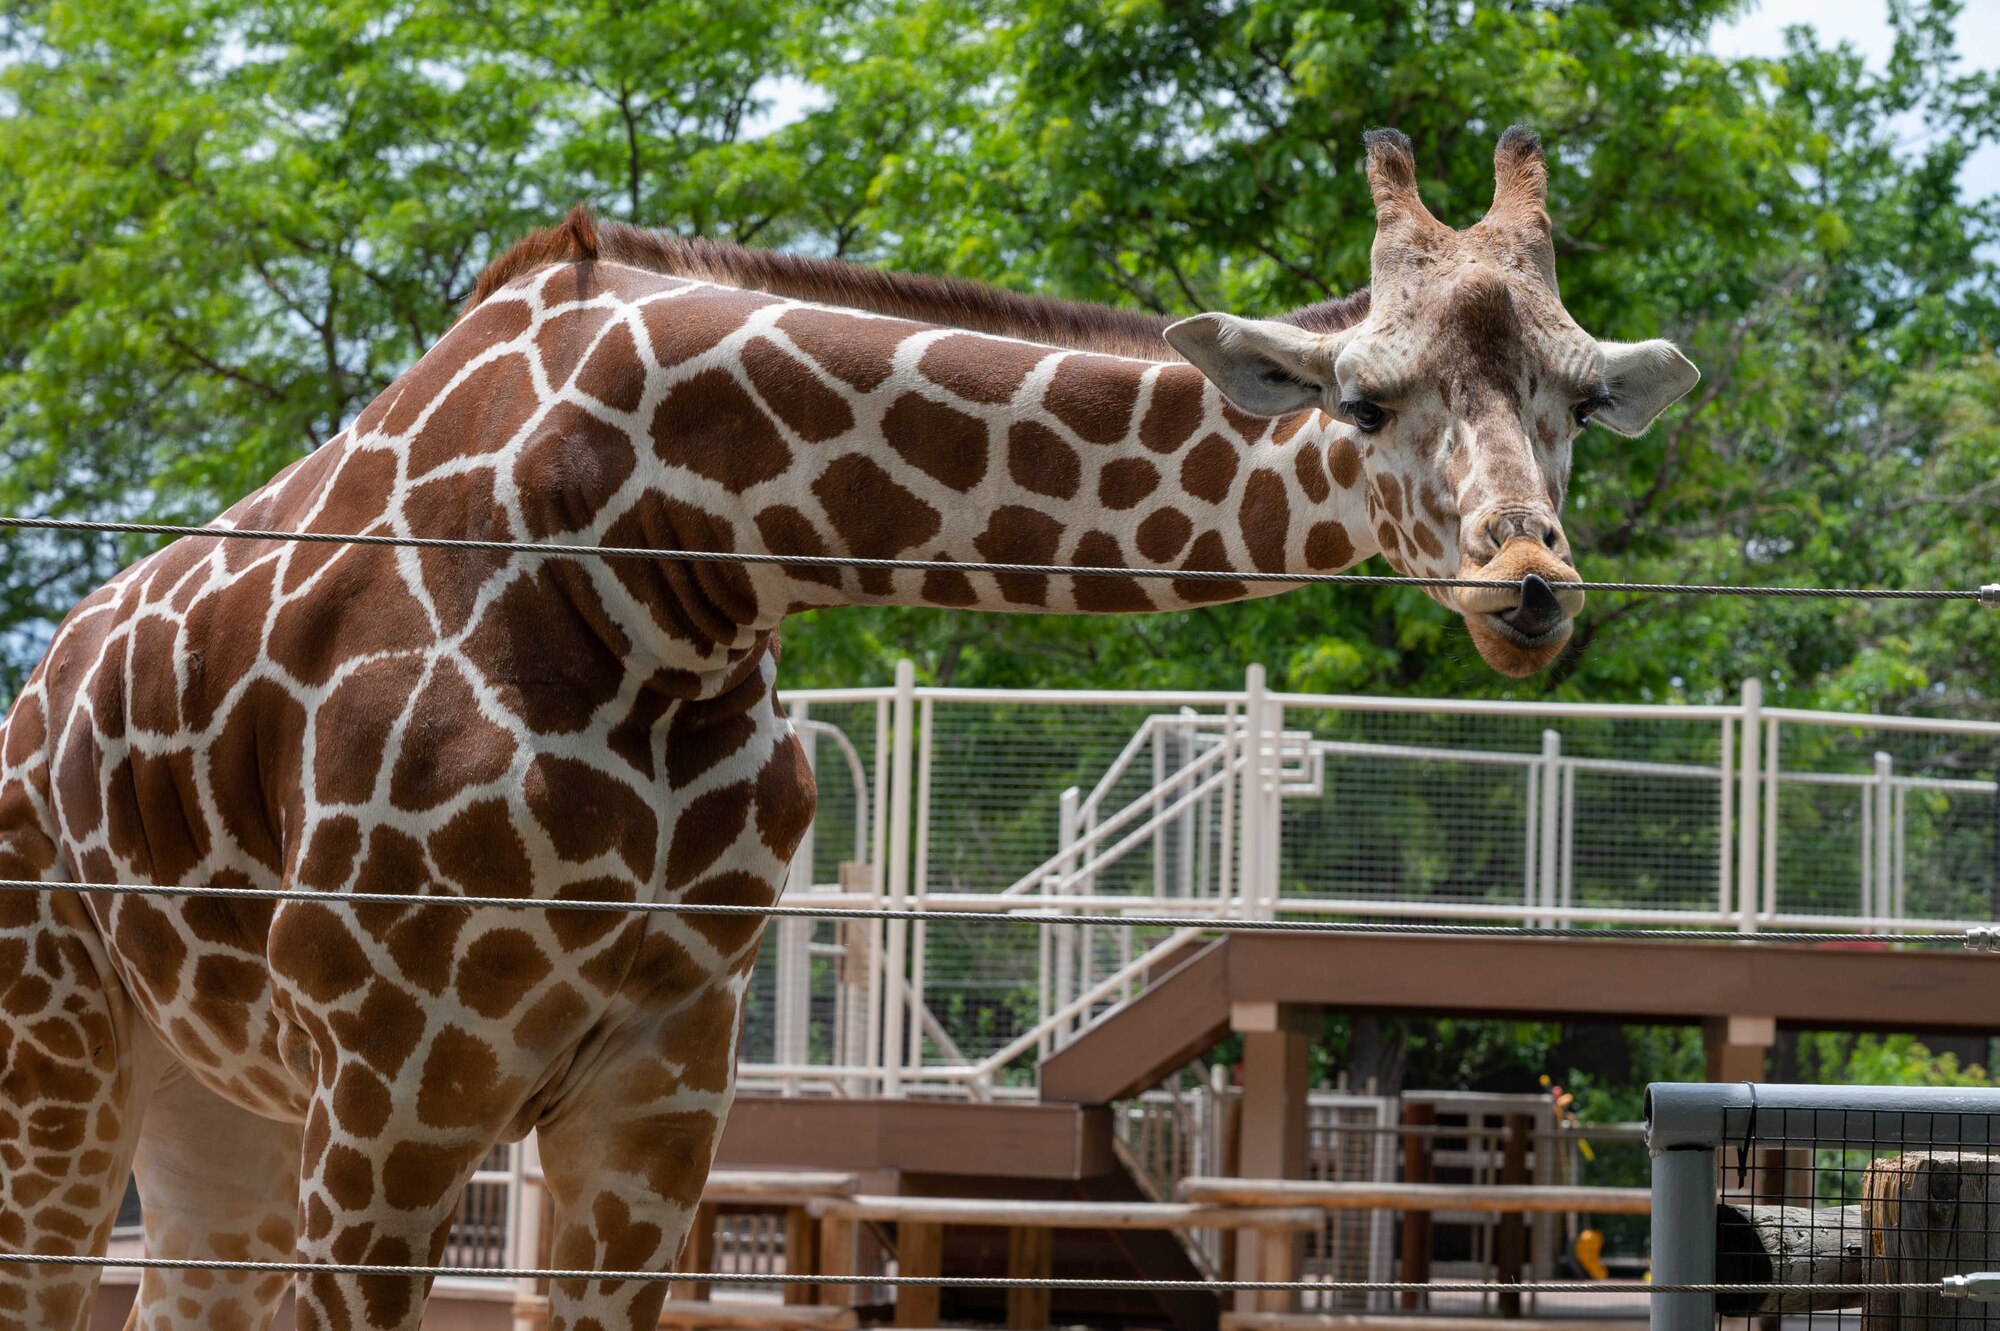 A giraffe at the zoo